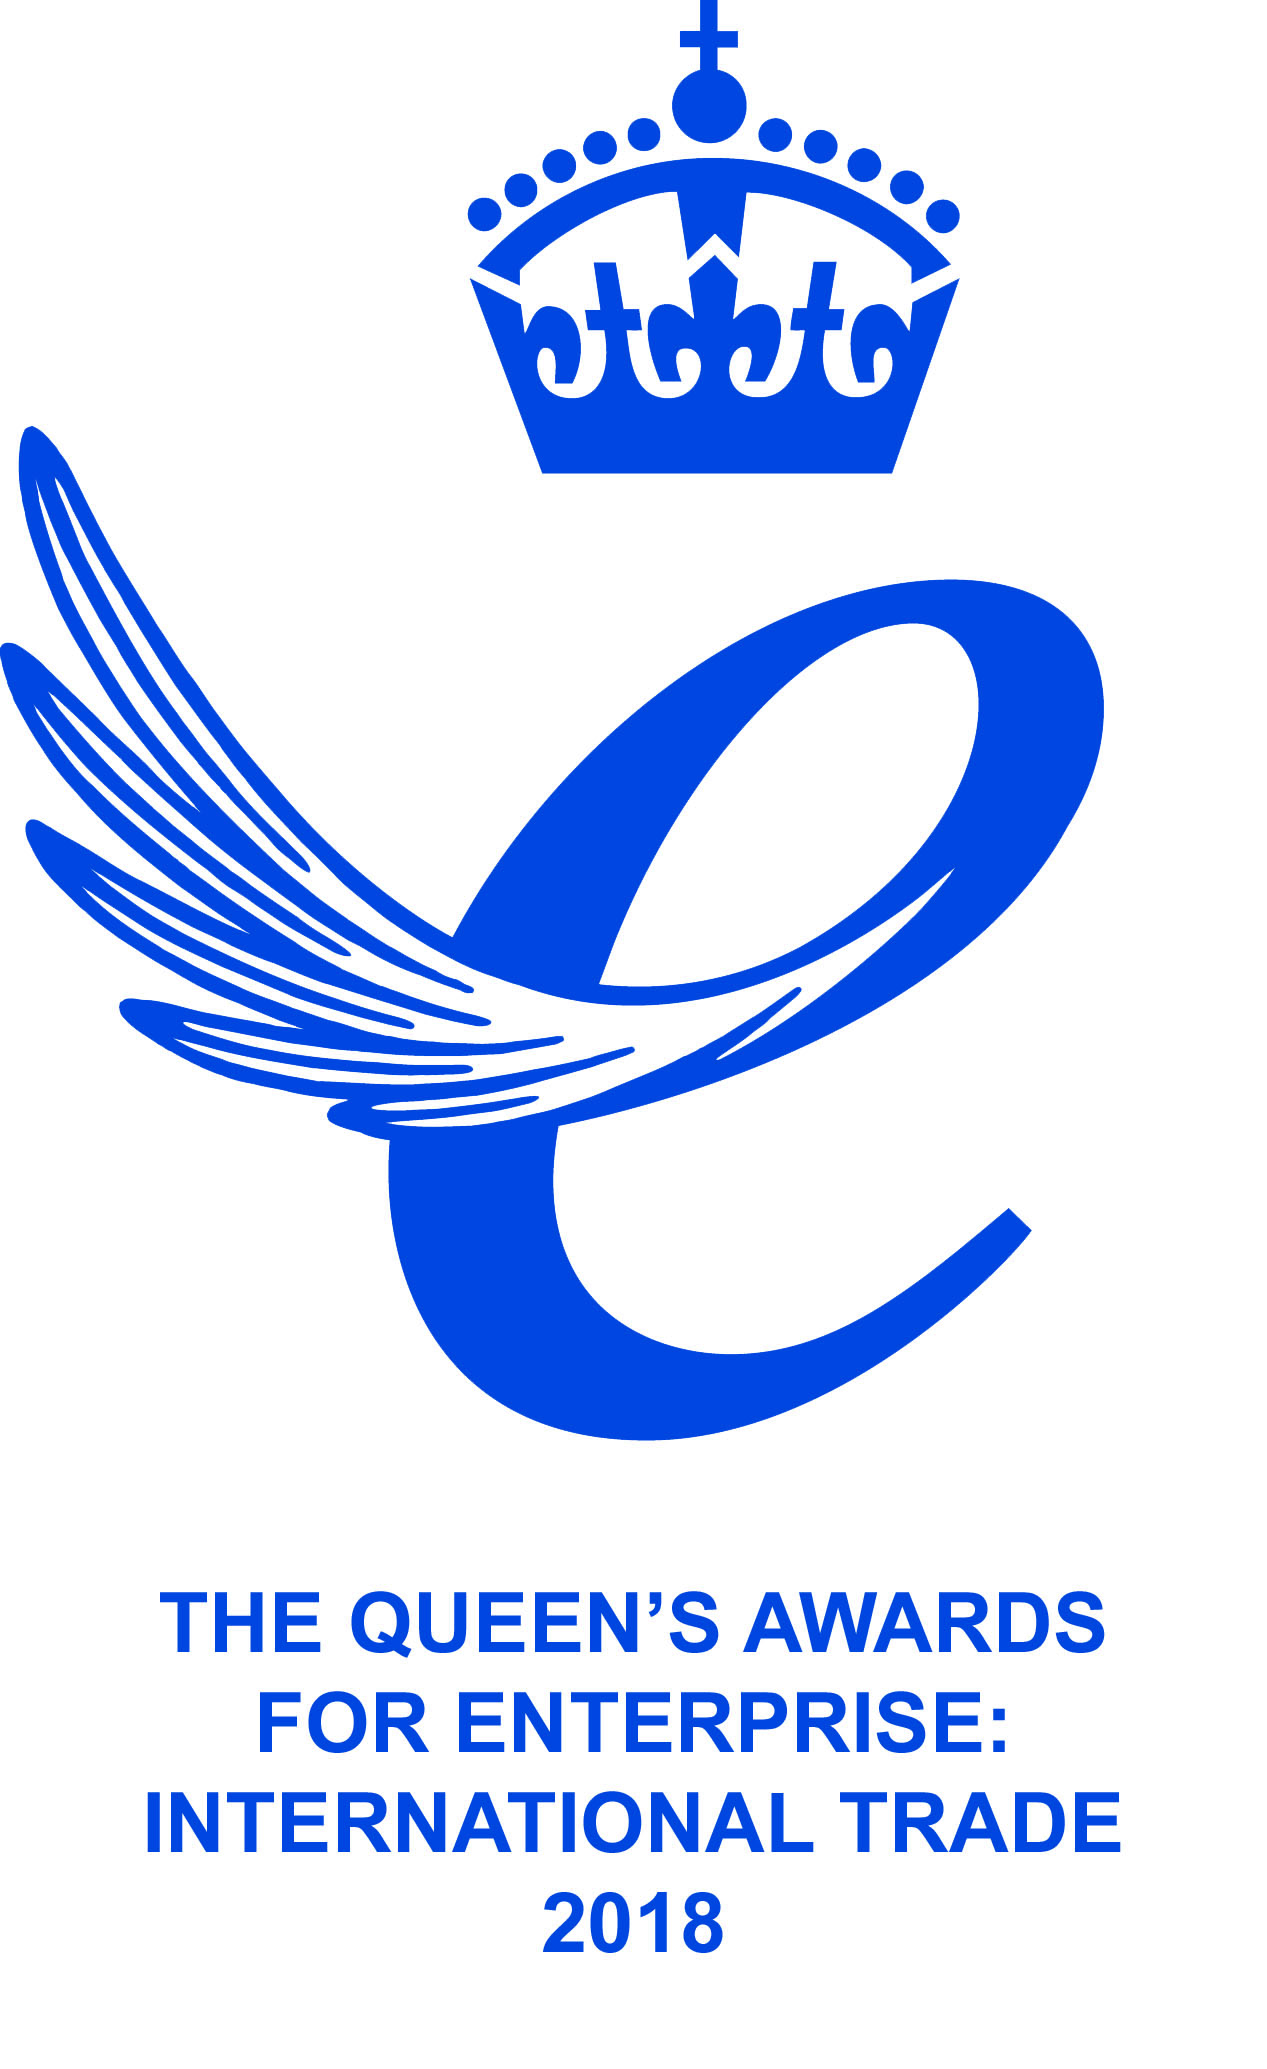 The Queen's Awards for Enterprise, International Trade 2018